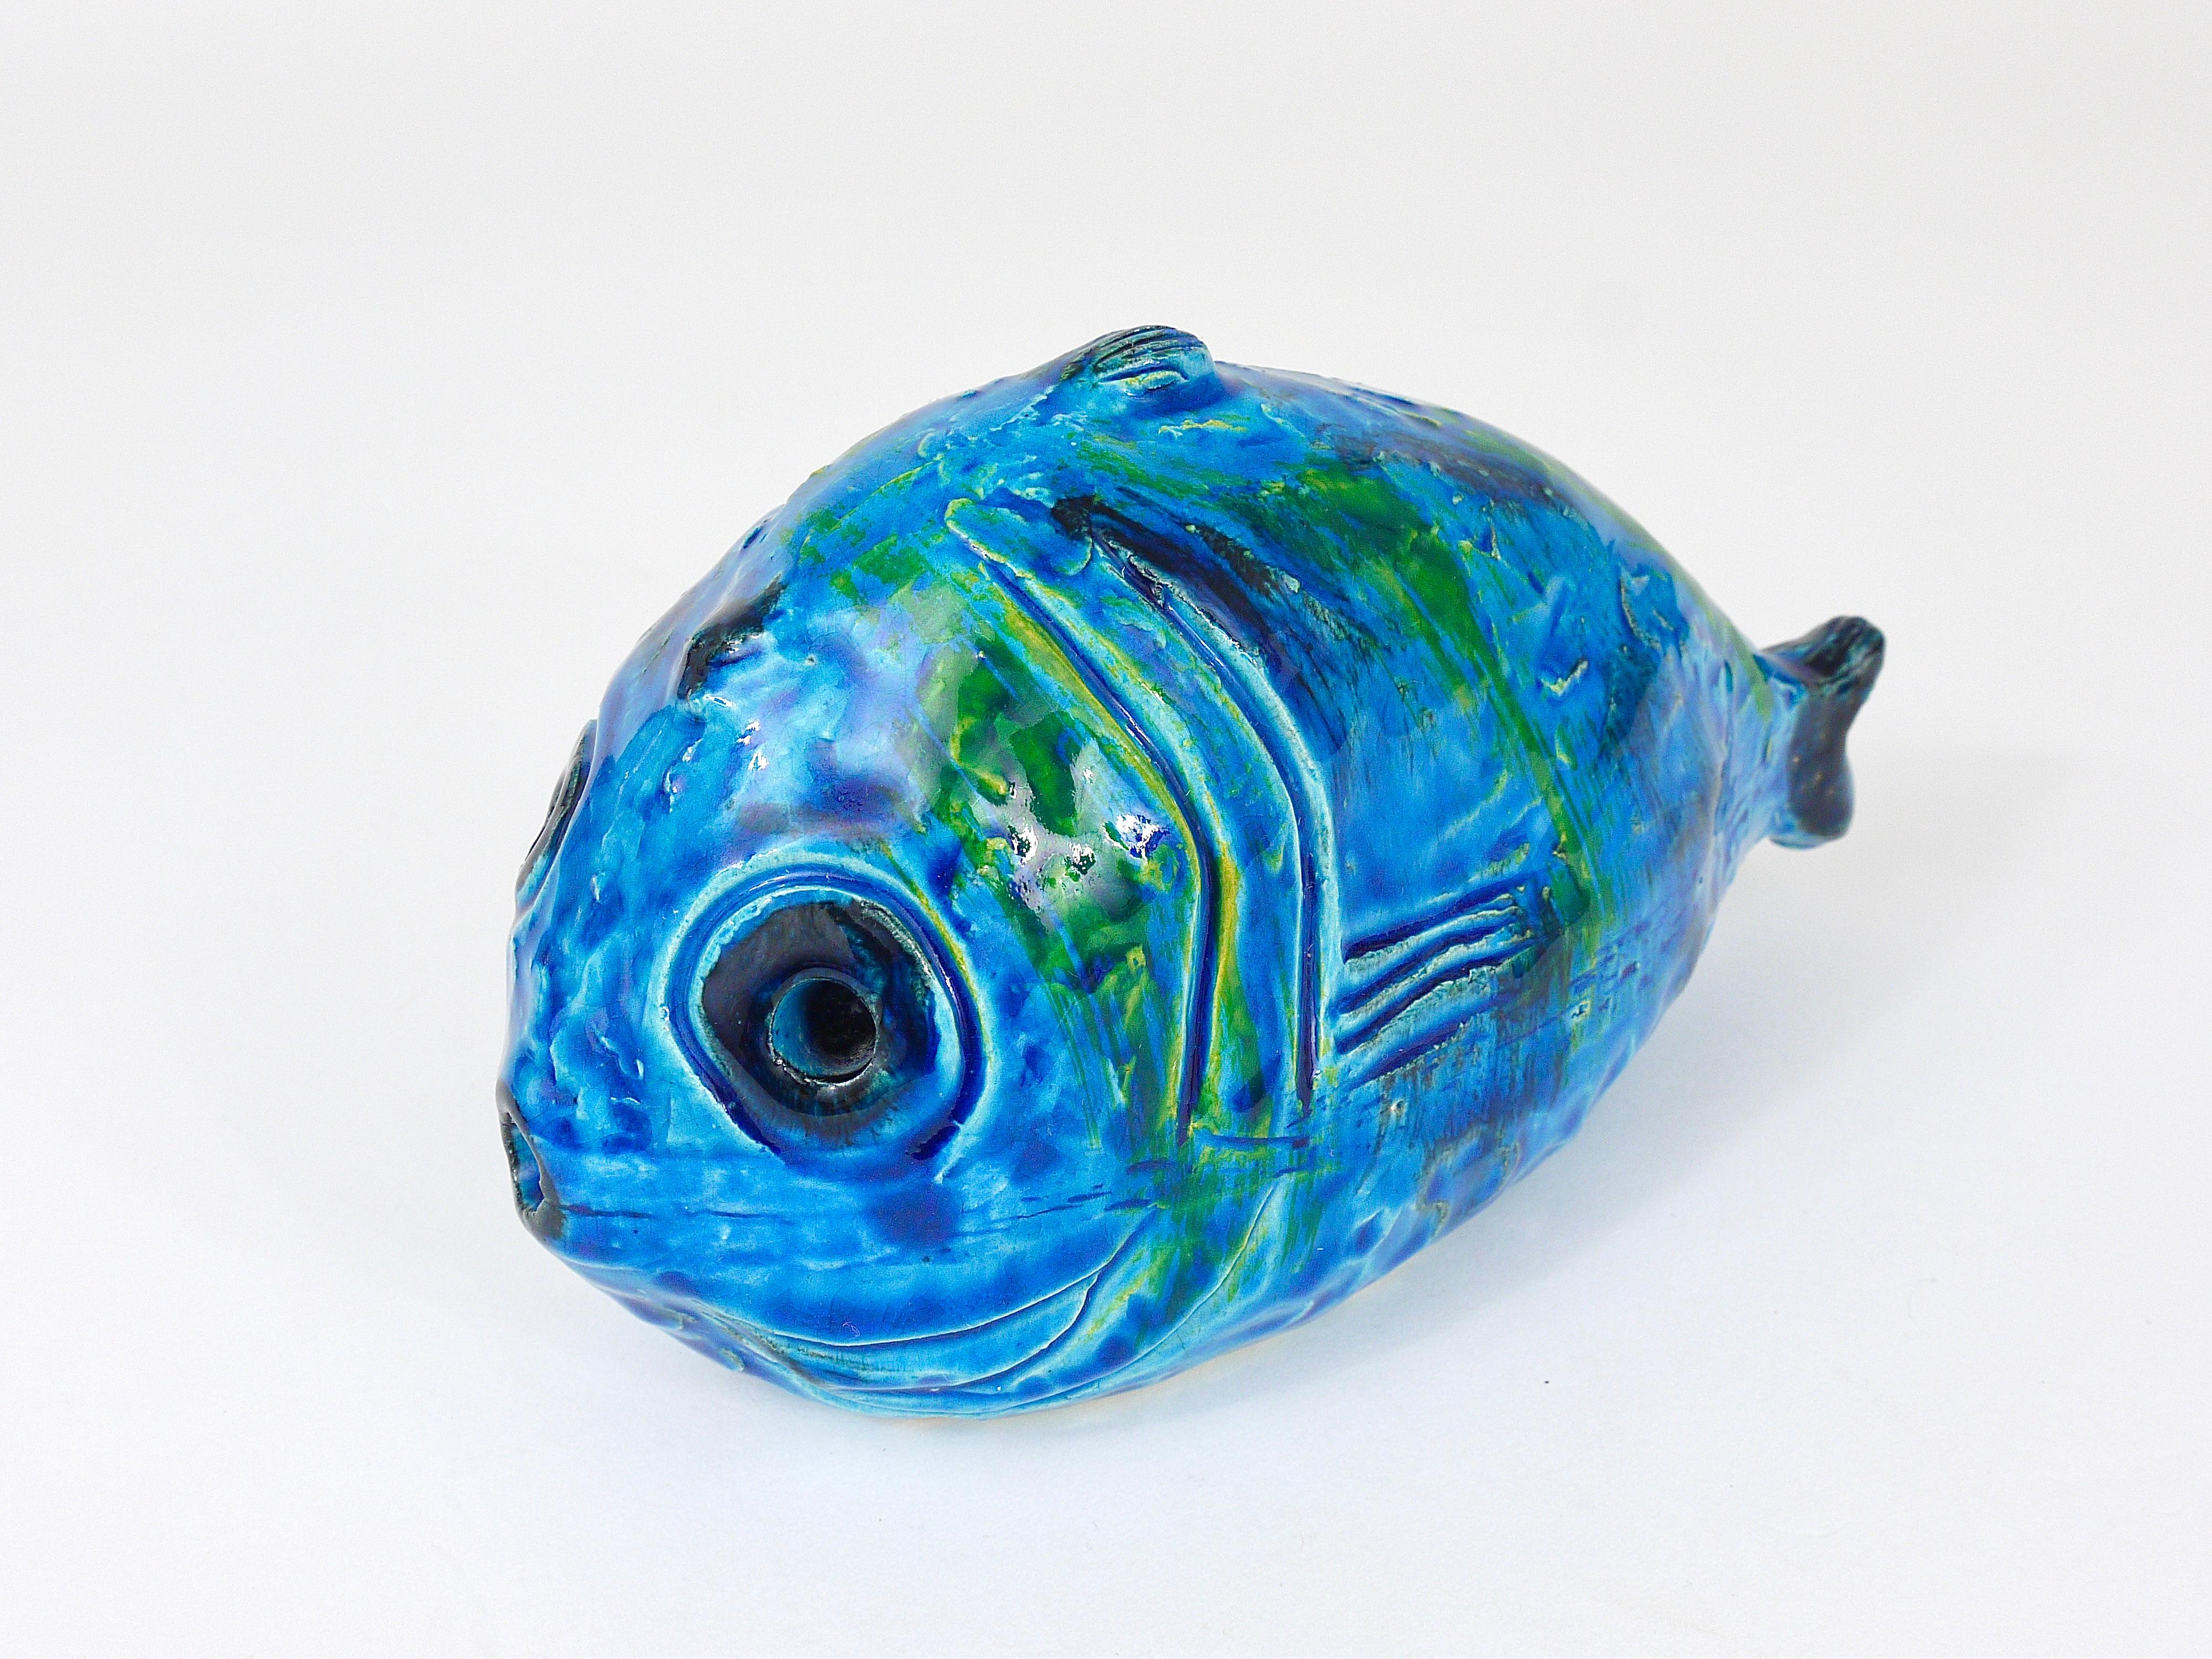 Aldo Londi Bitossi Rimini Blue Glazed Fish Sculpture Figurine, Italy, 1950s For Sale 2